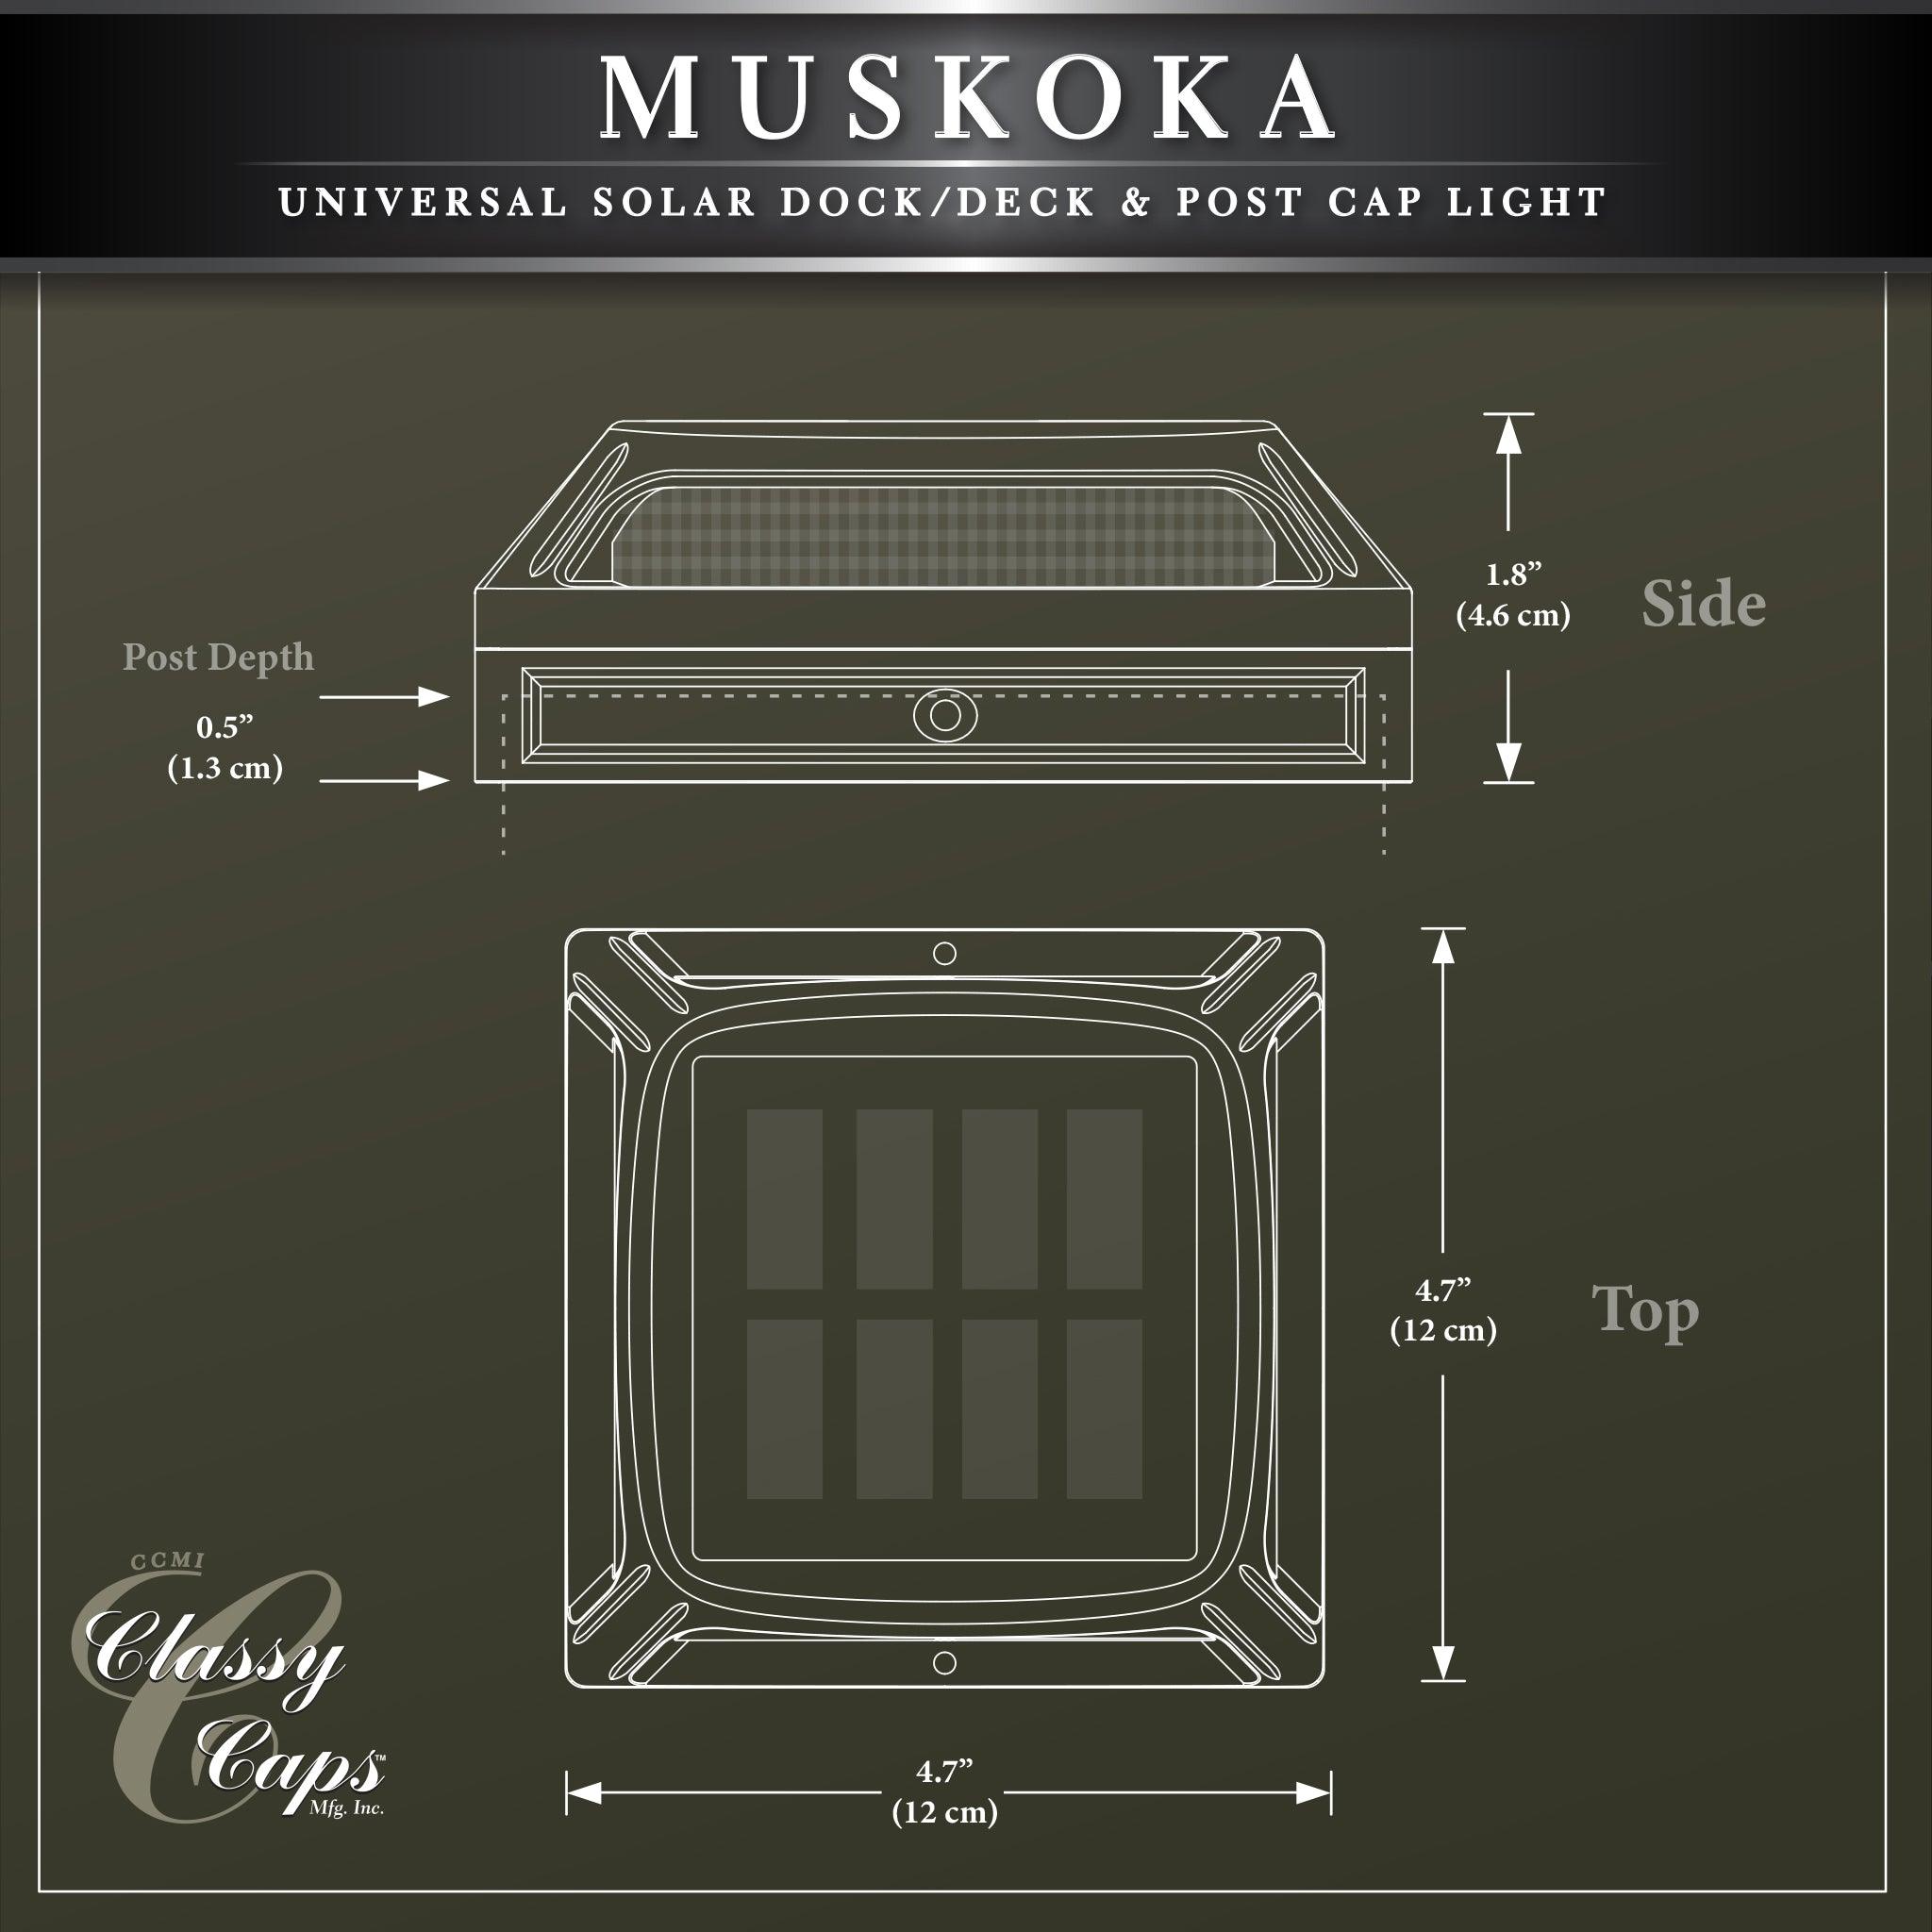 Muskoka Universal Solar Dock/Deck & Post Cap Light - Black